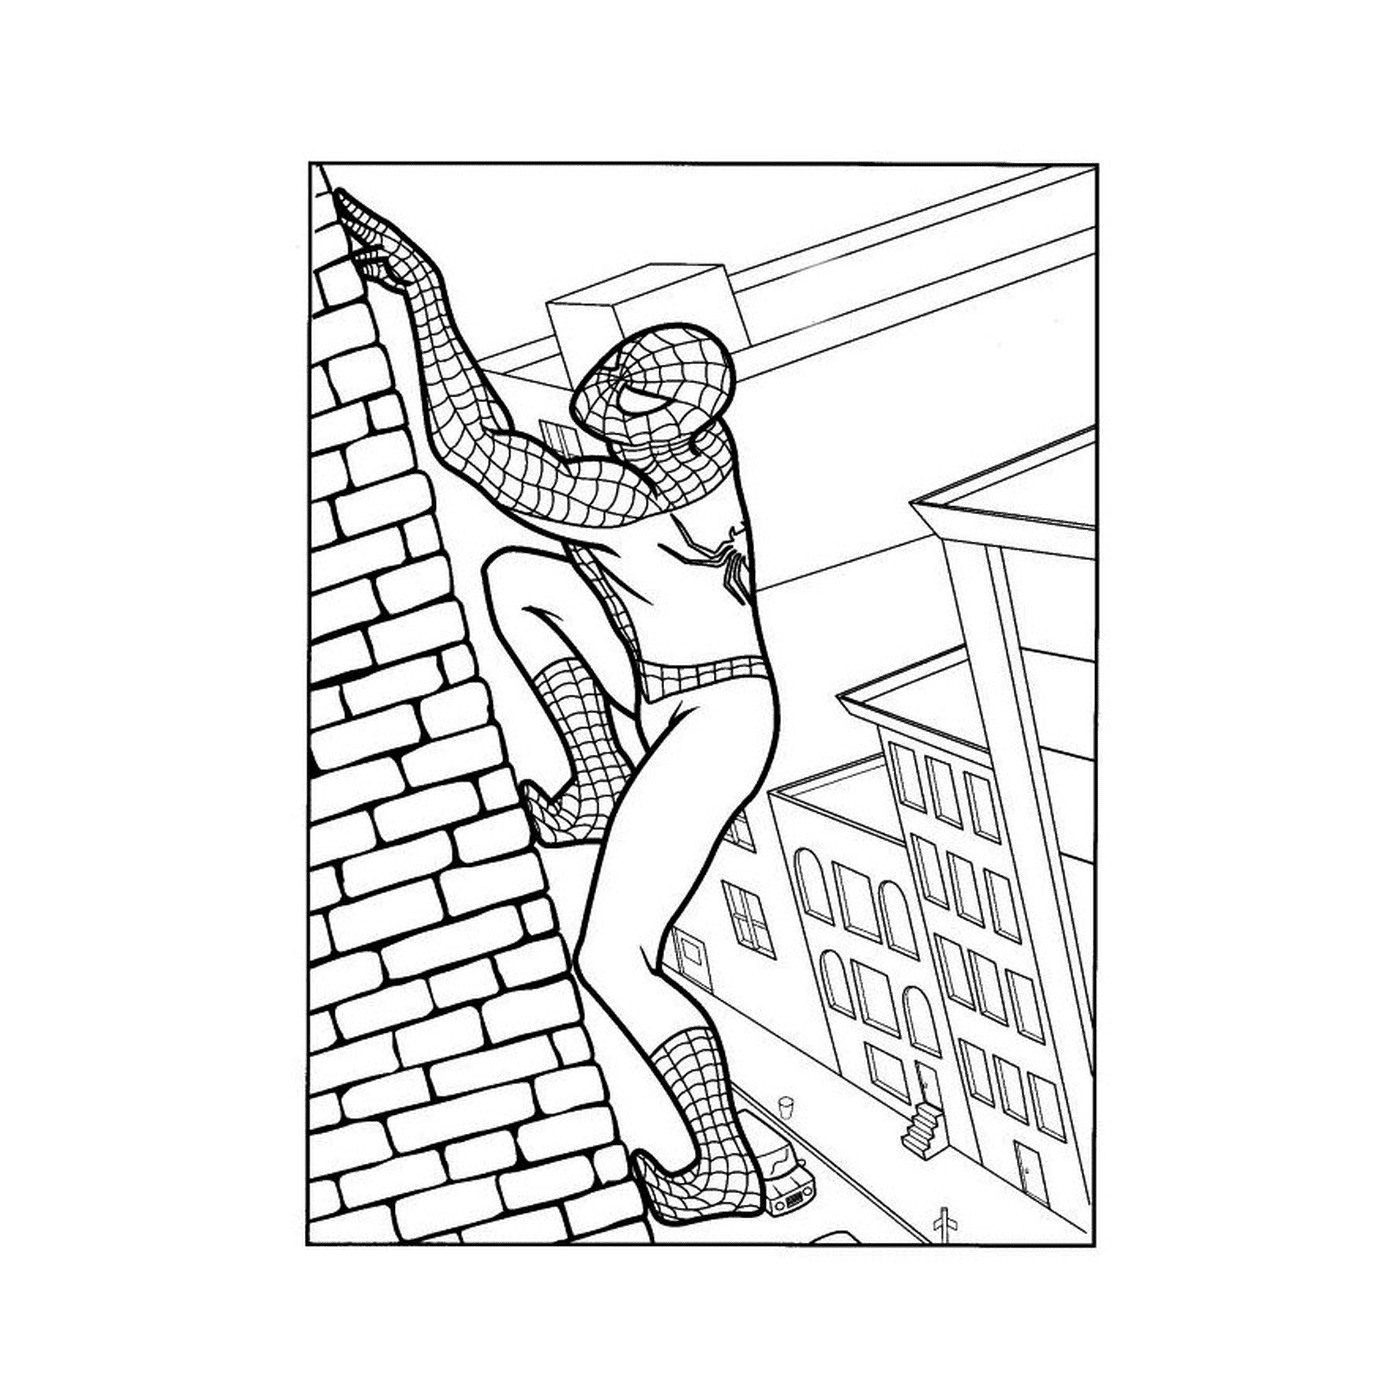  Spiderman escala una pared 